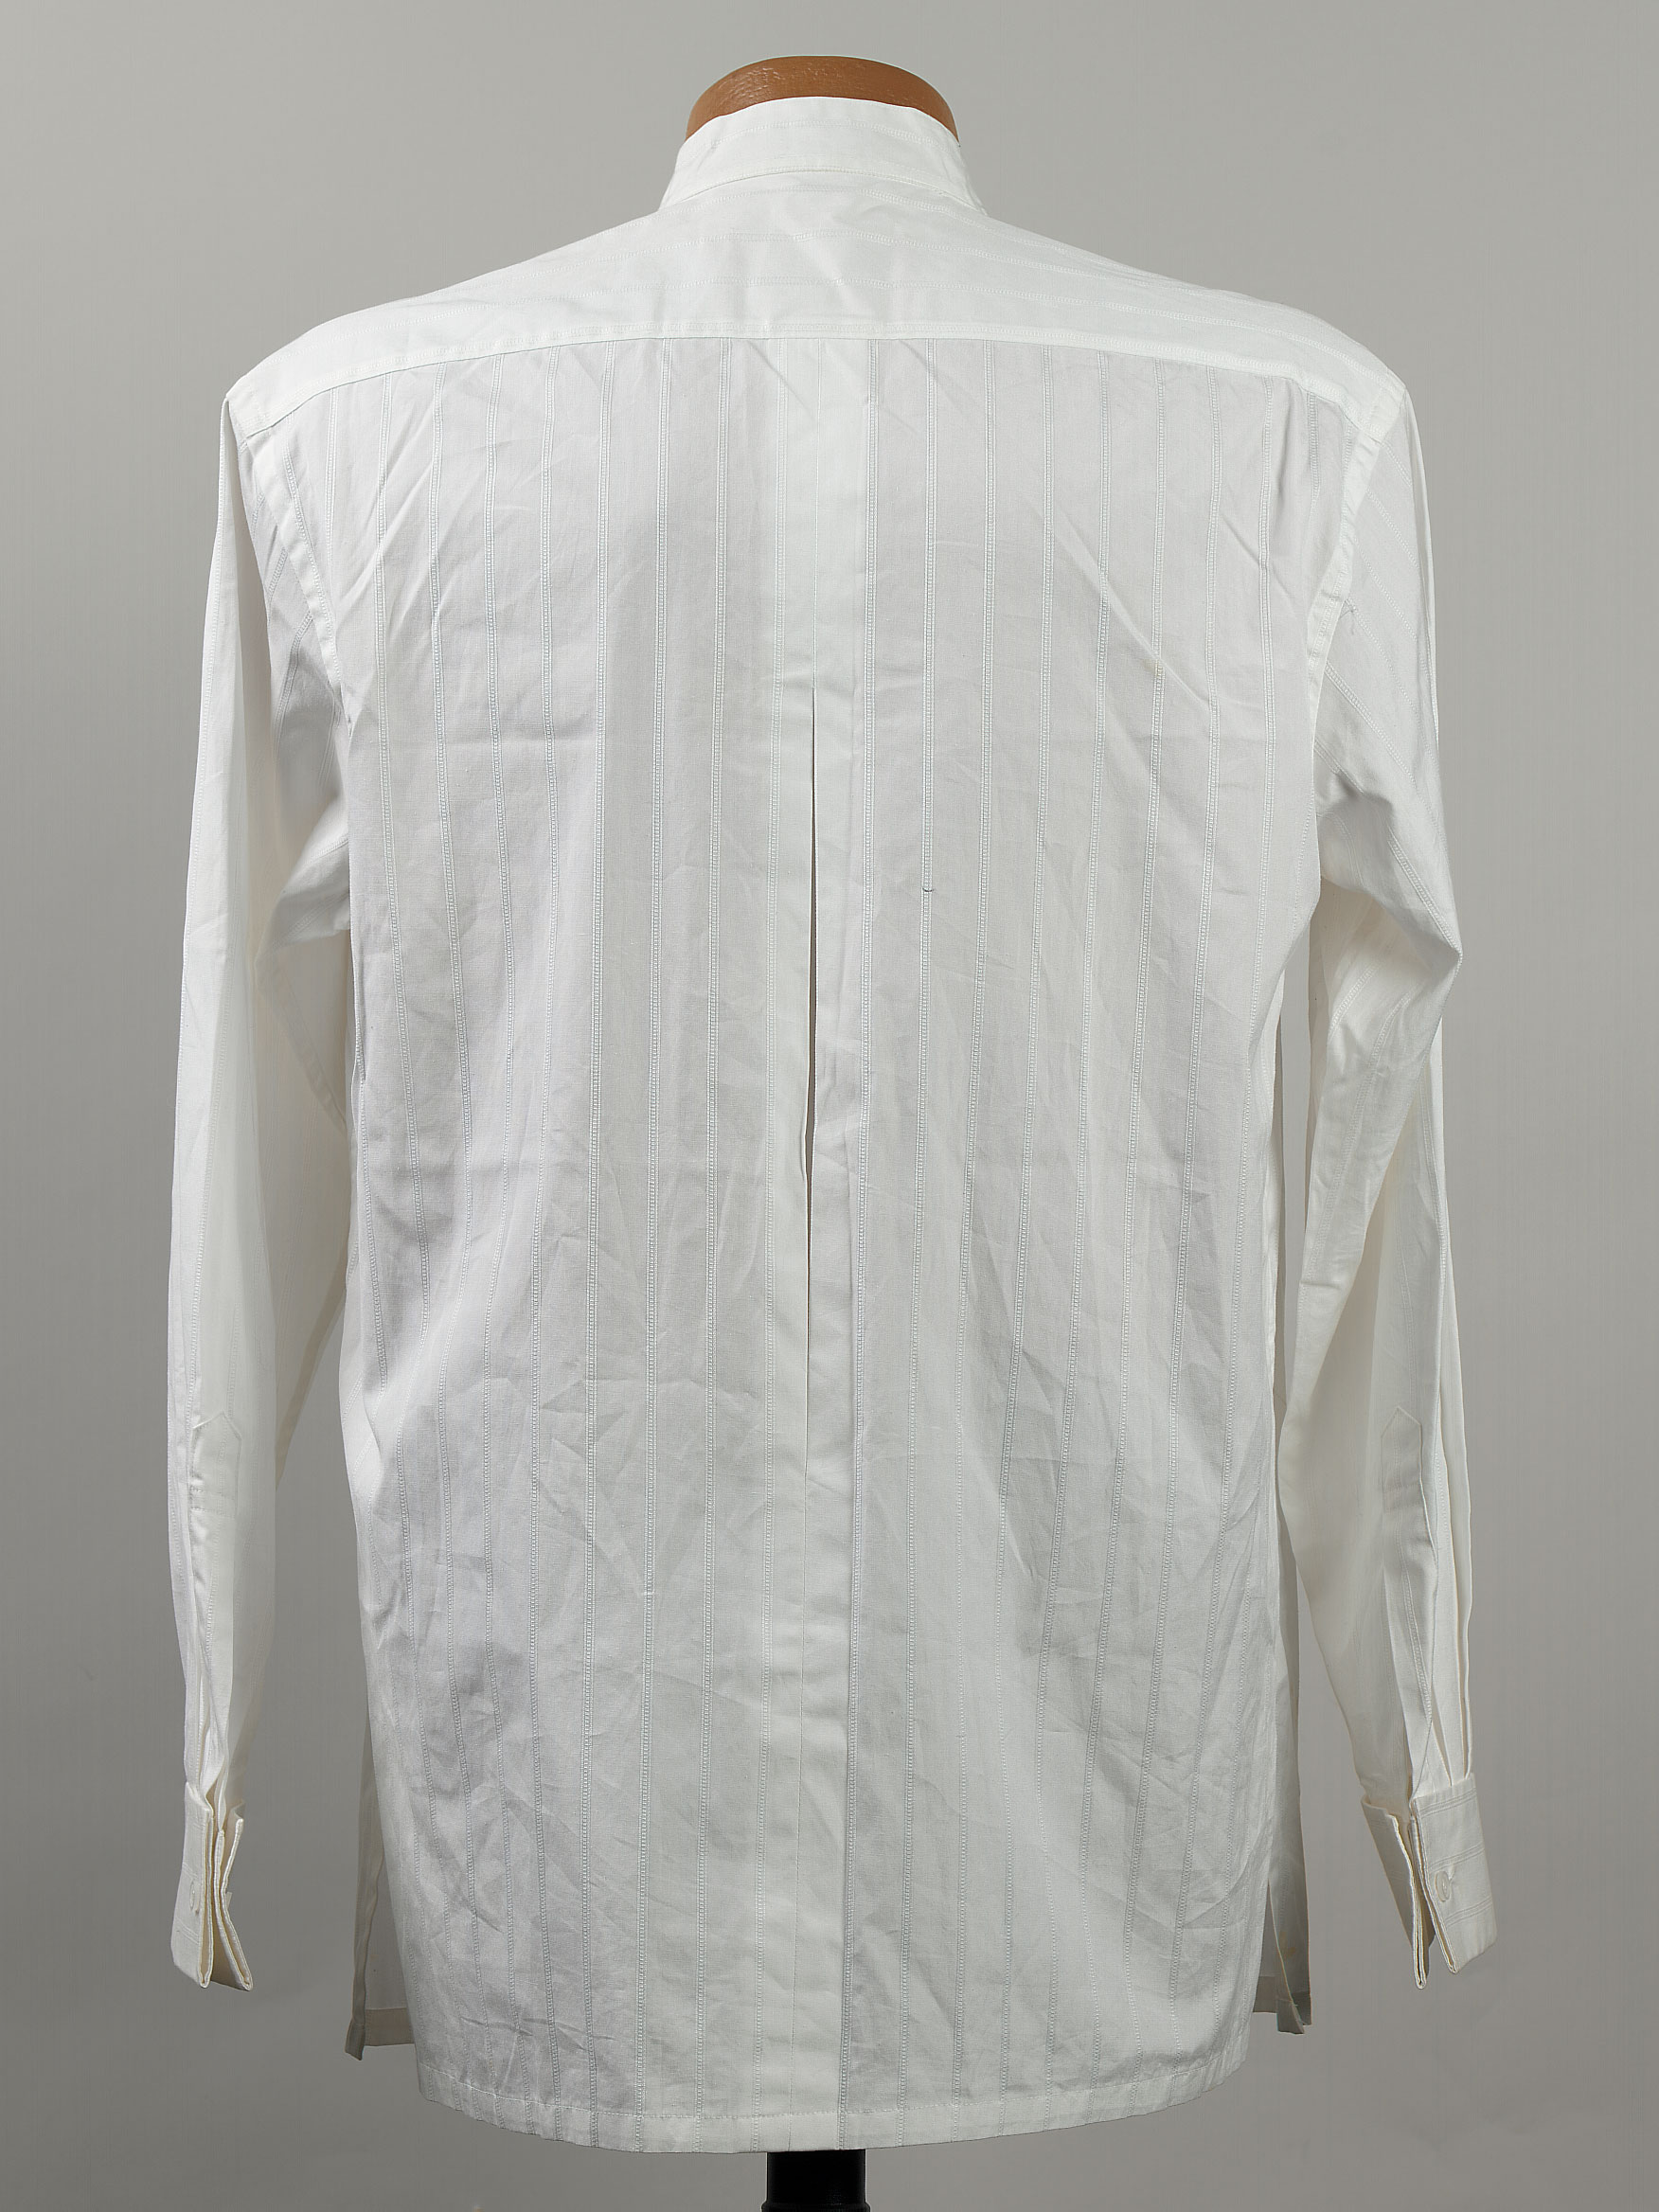 A dress shirt worn by Patti Smith (back)